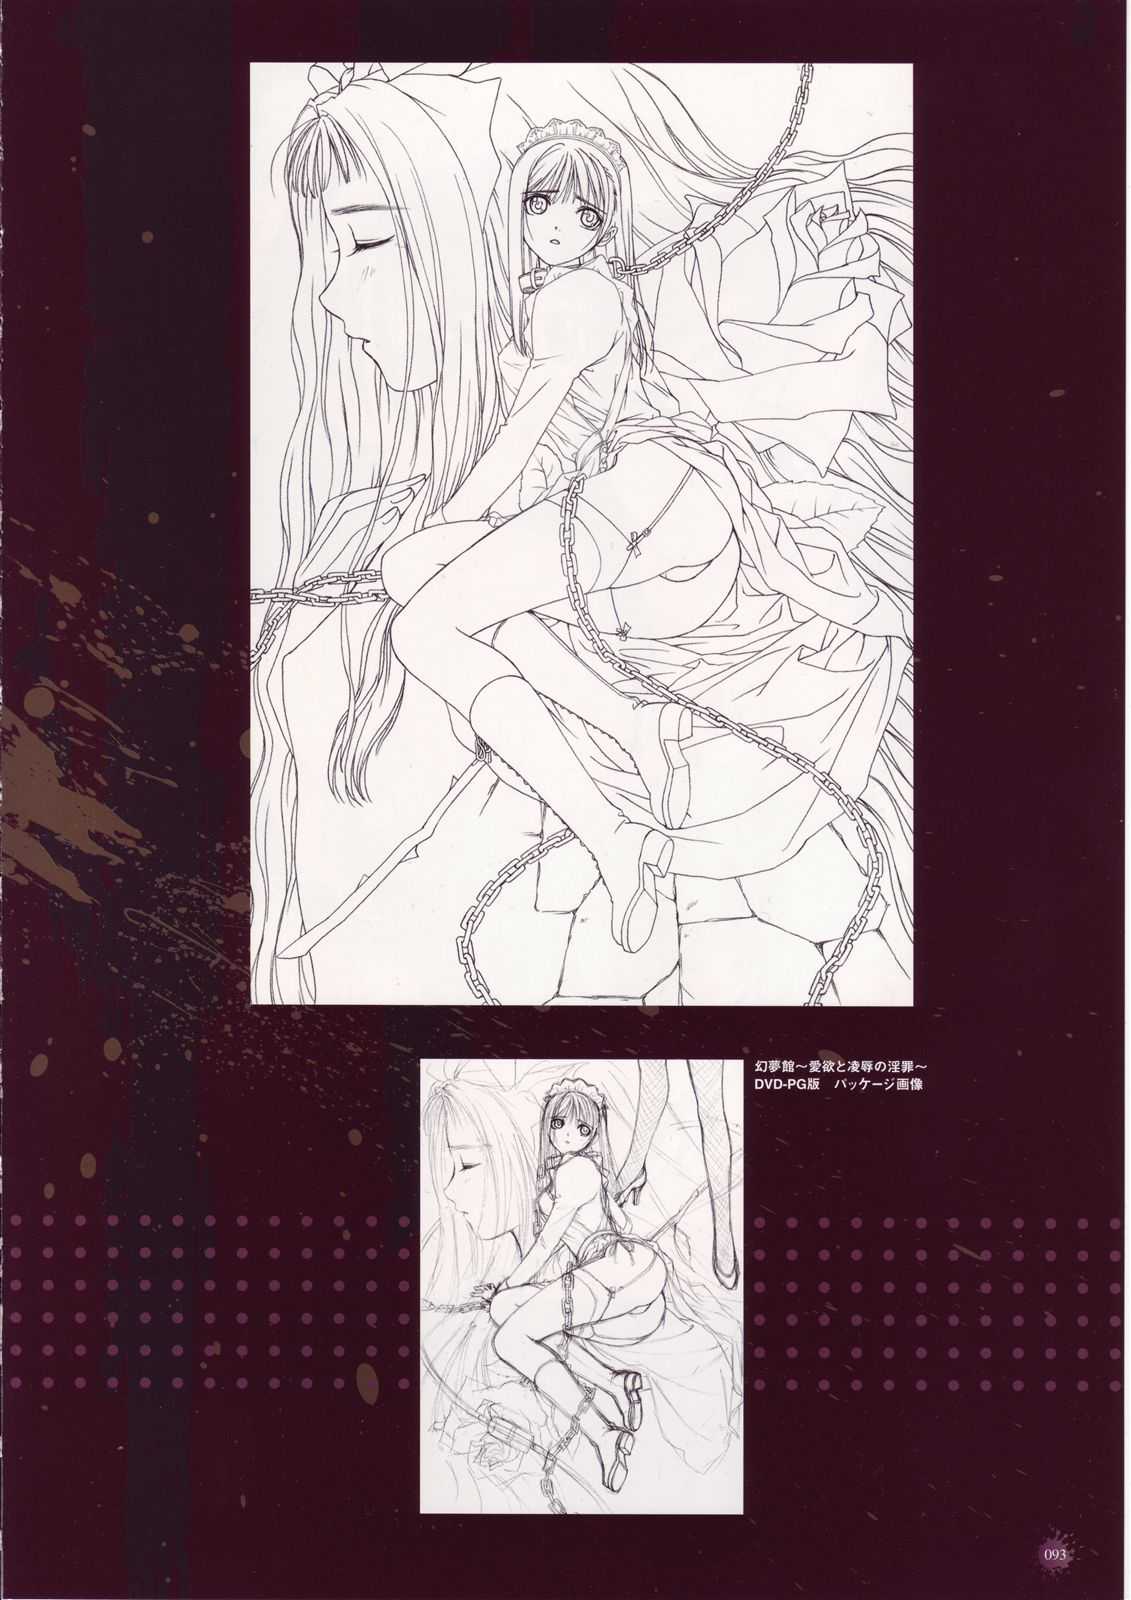 [T2 Art Works, Tony Taka] - Shiryusha Book (sora no iro mizu no iro, genmukan) 